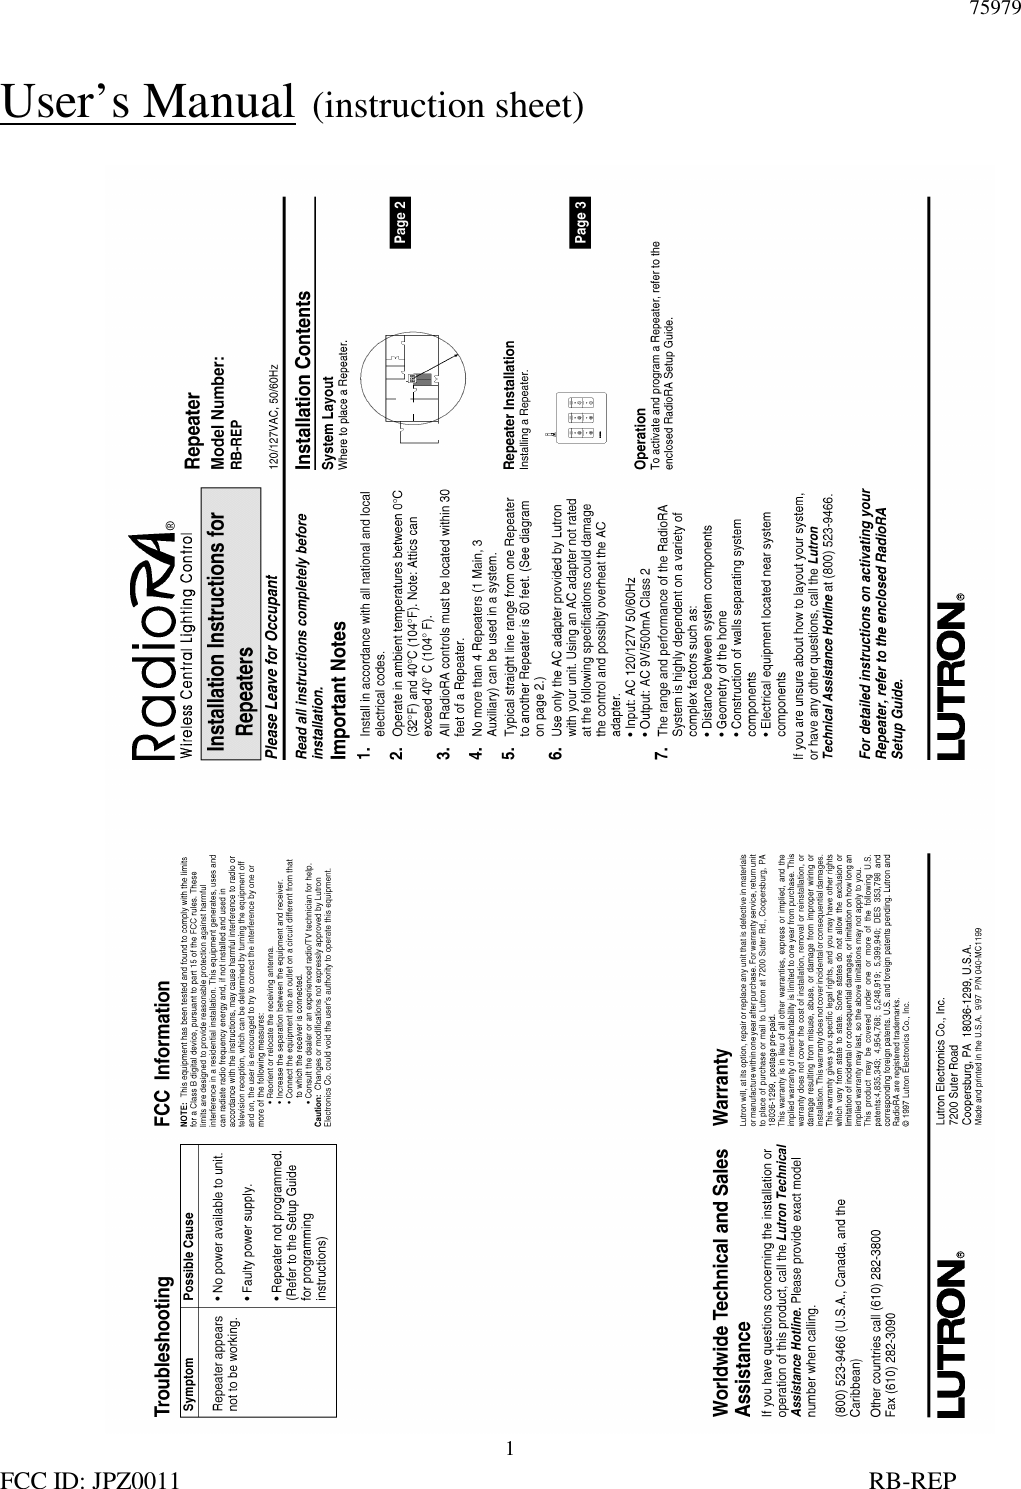 75979FCC ID: JPZ0011                                                                                                              RB-REP1User’s Manual  (instruction sheet)